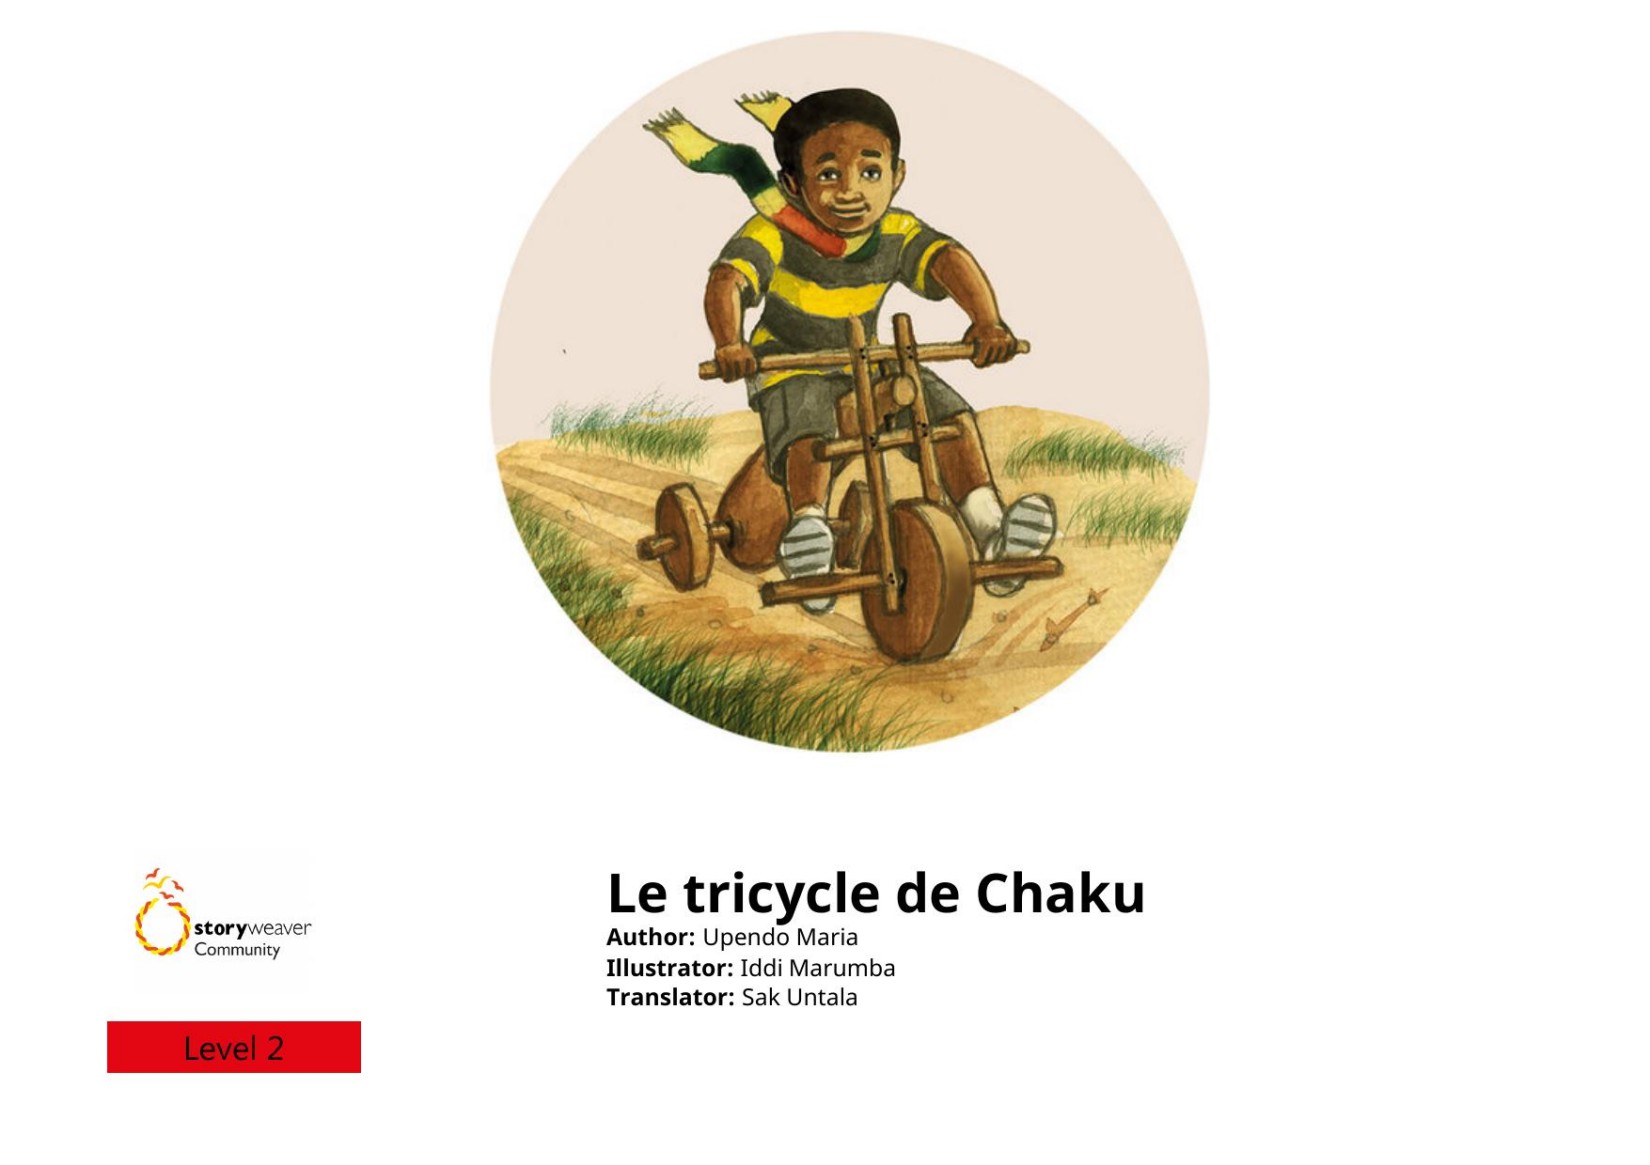 Le tricycle de Chaku